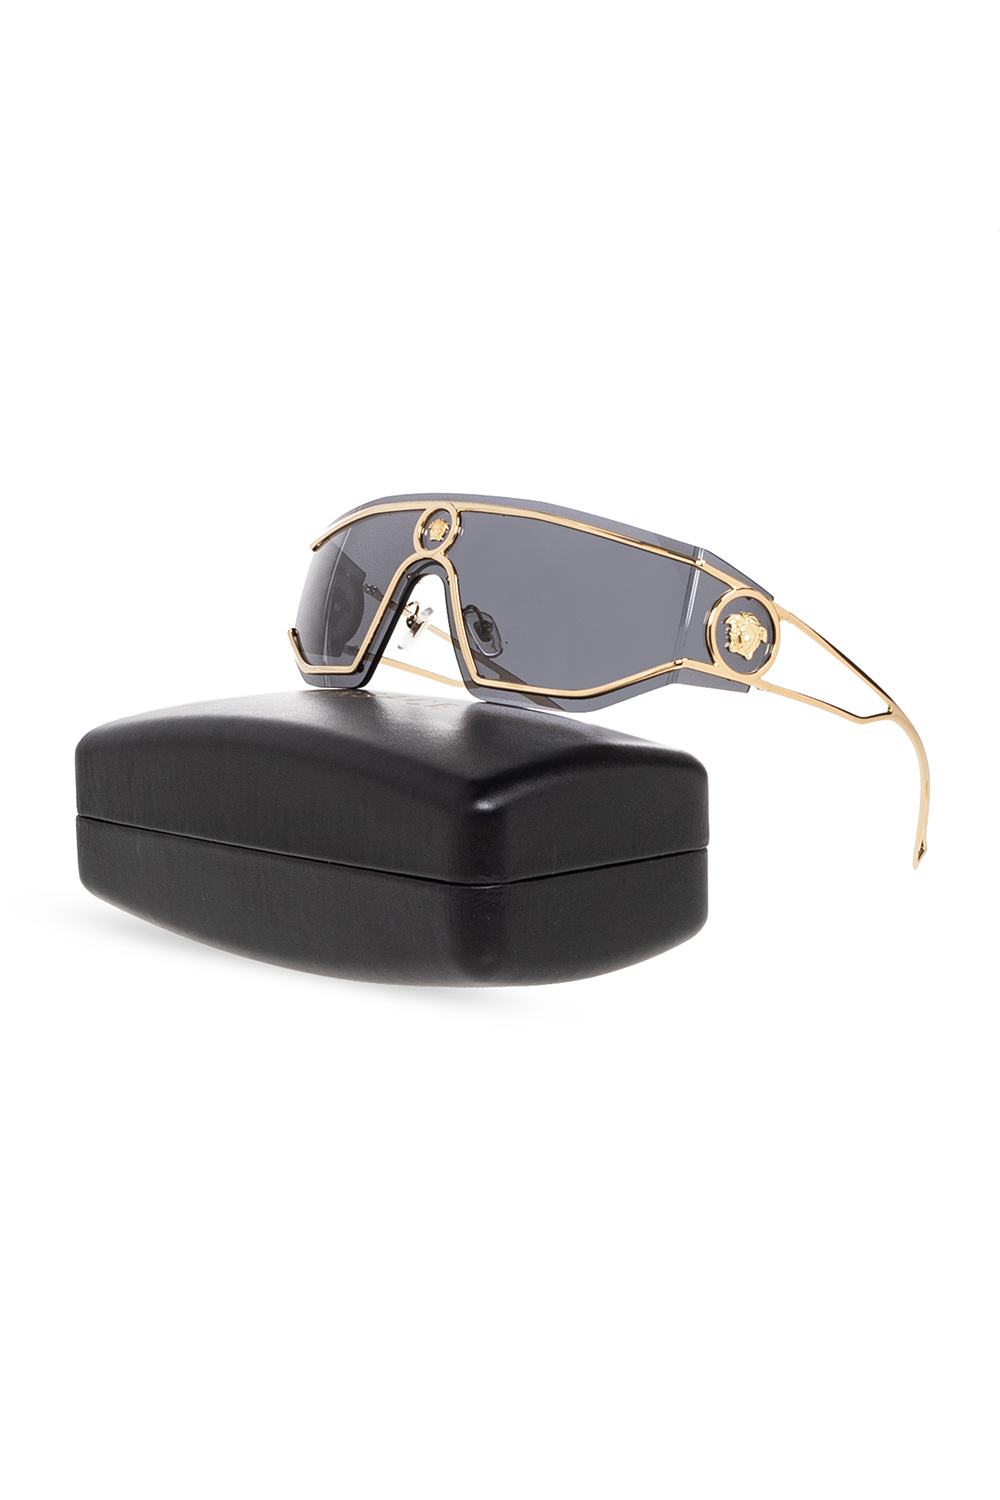 Versace dior eyewear wildior s3u square Avalon sunglasses